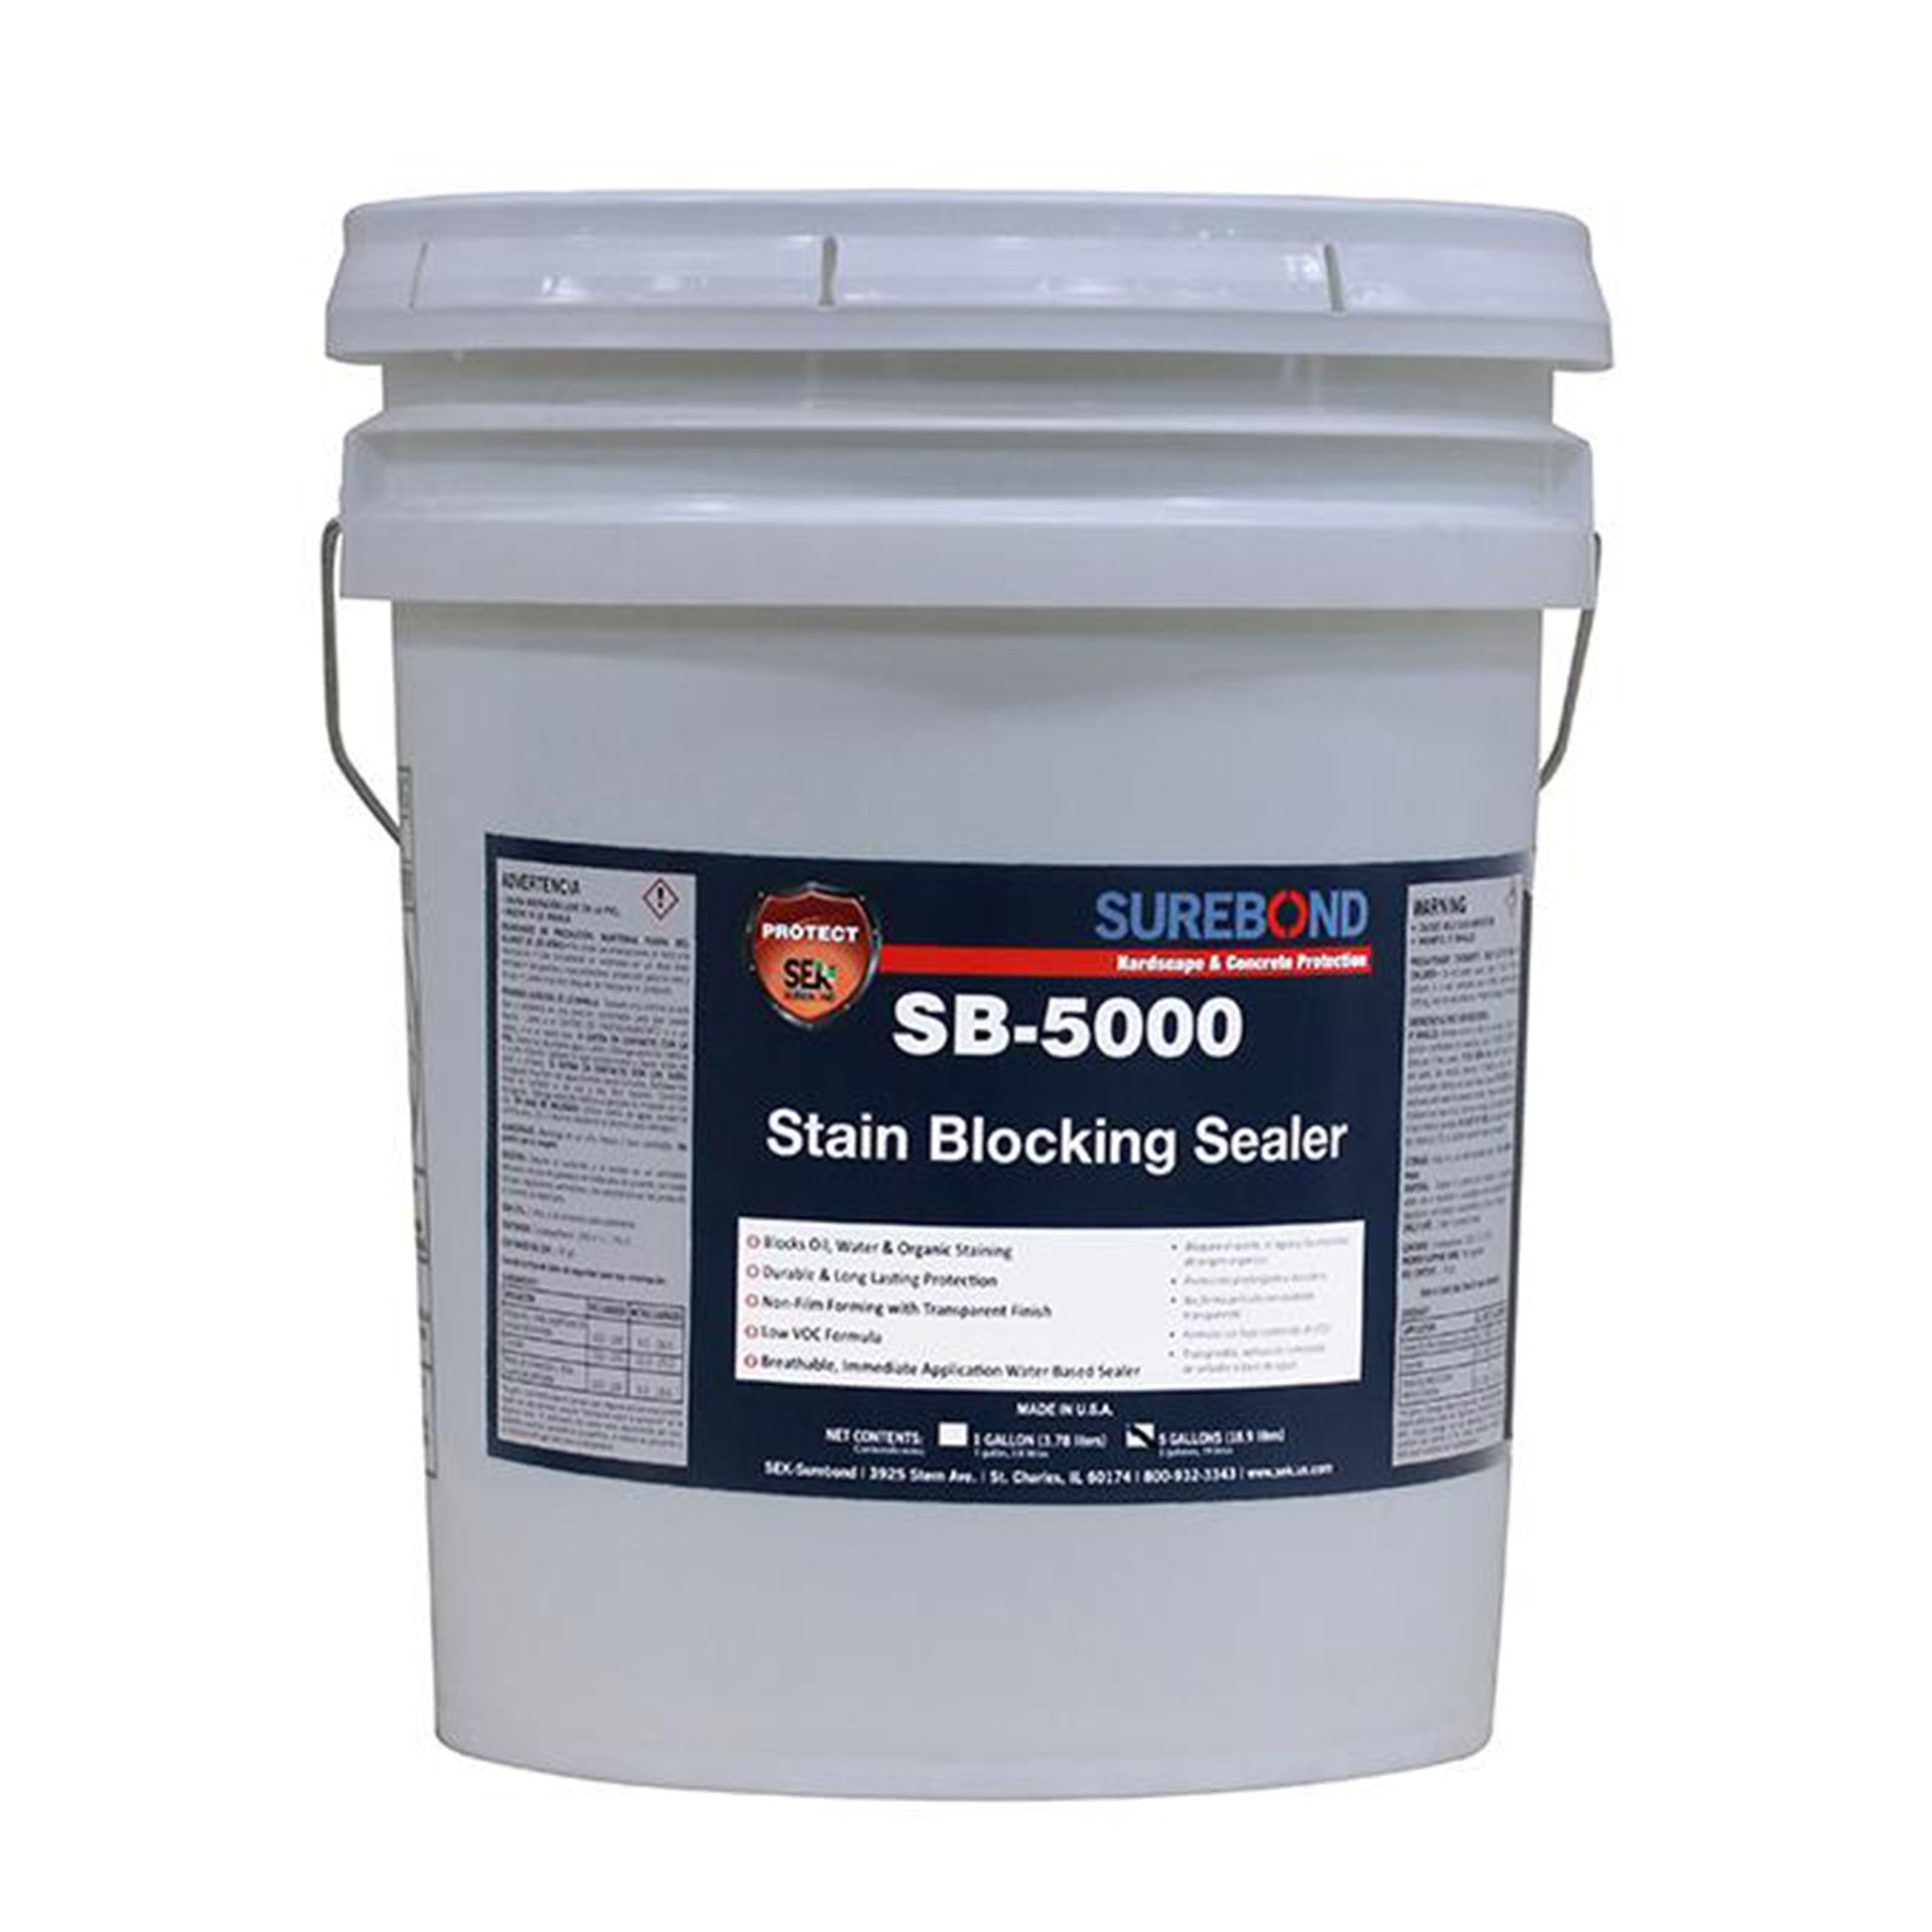 Surebond SB-5000 Stain Blocking Sealer